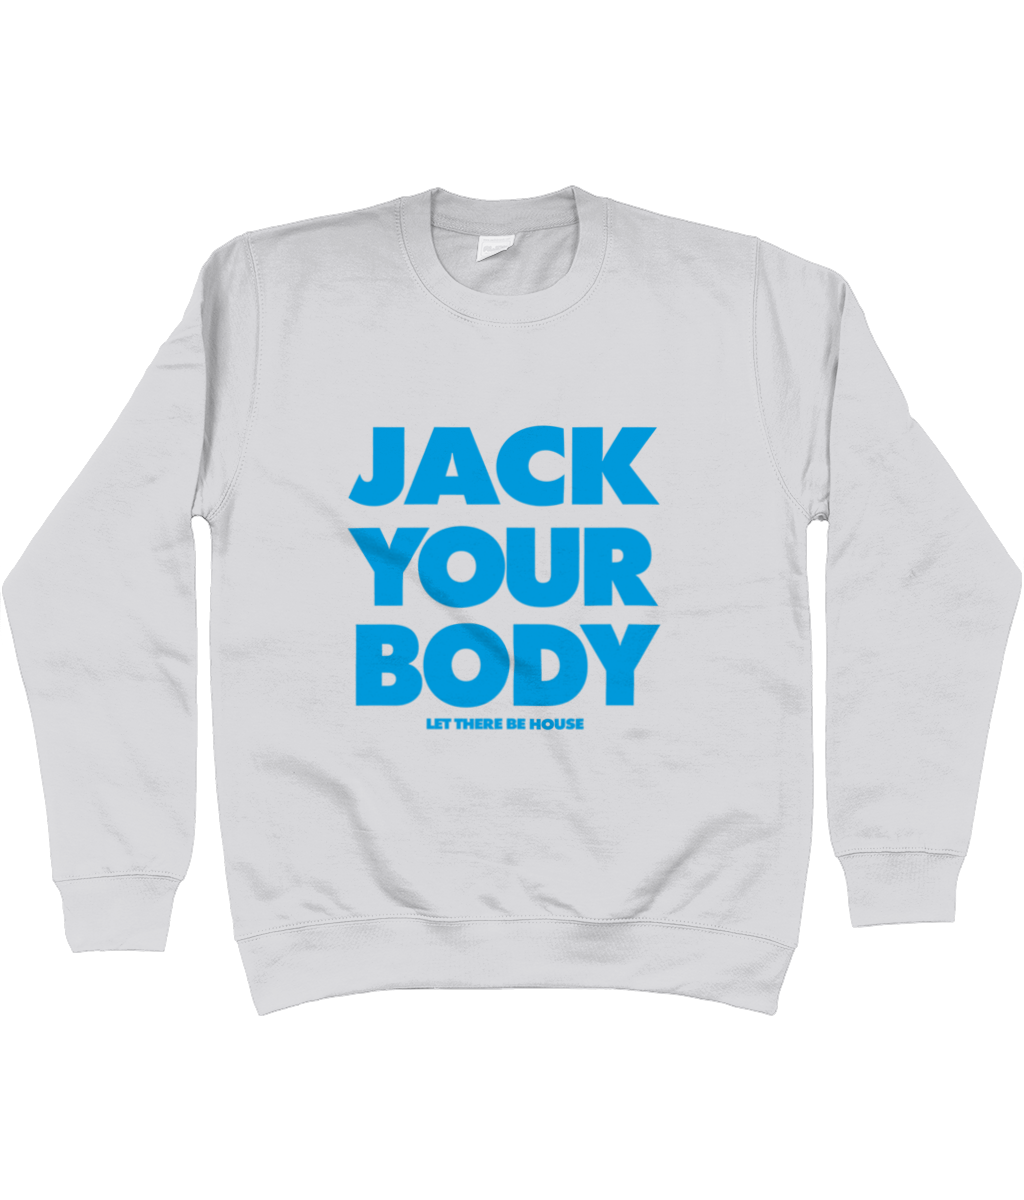 Sweatshirt Jack Body Blue